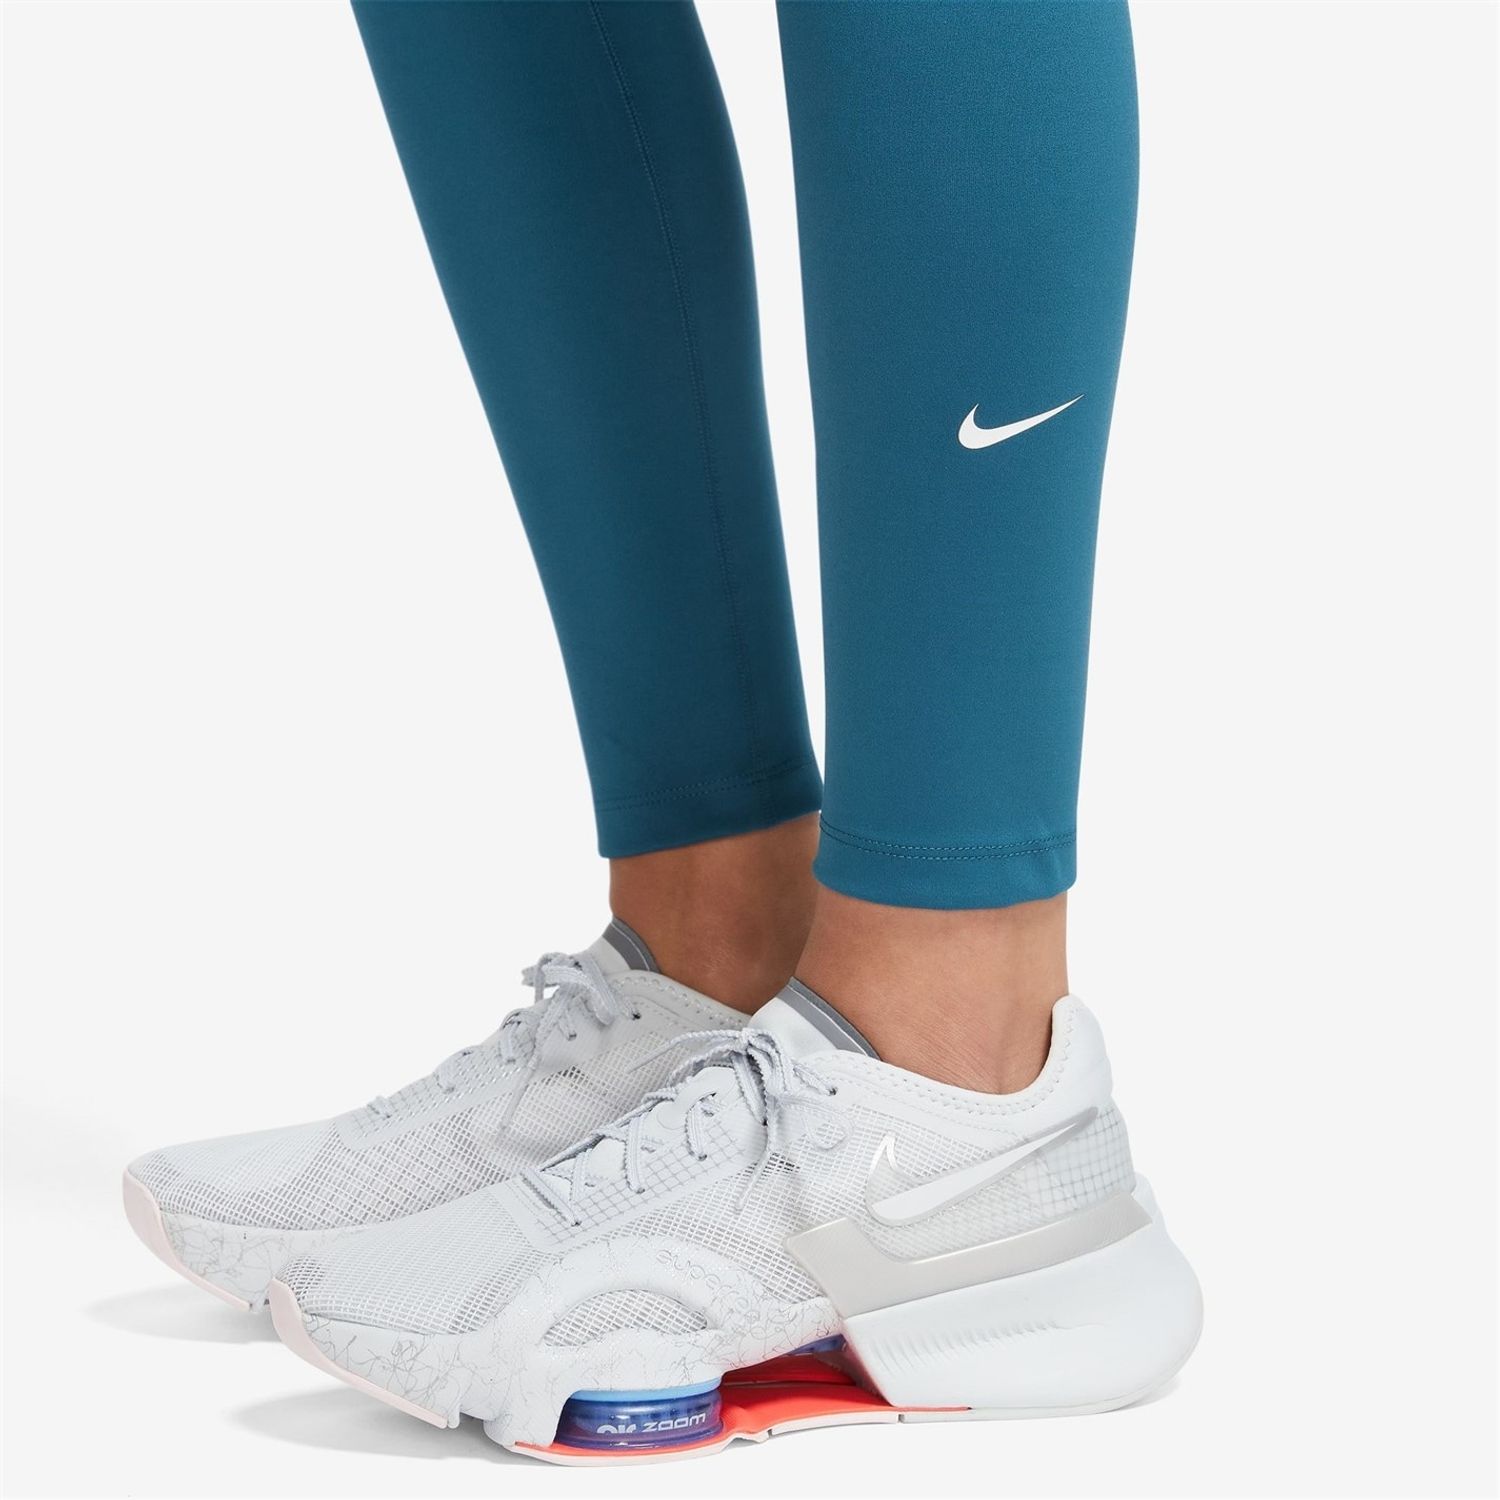 Black Nike Womens One Dri Fit High Rise Leggings - Get The Label